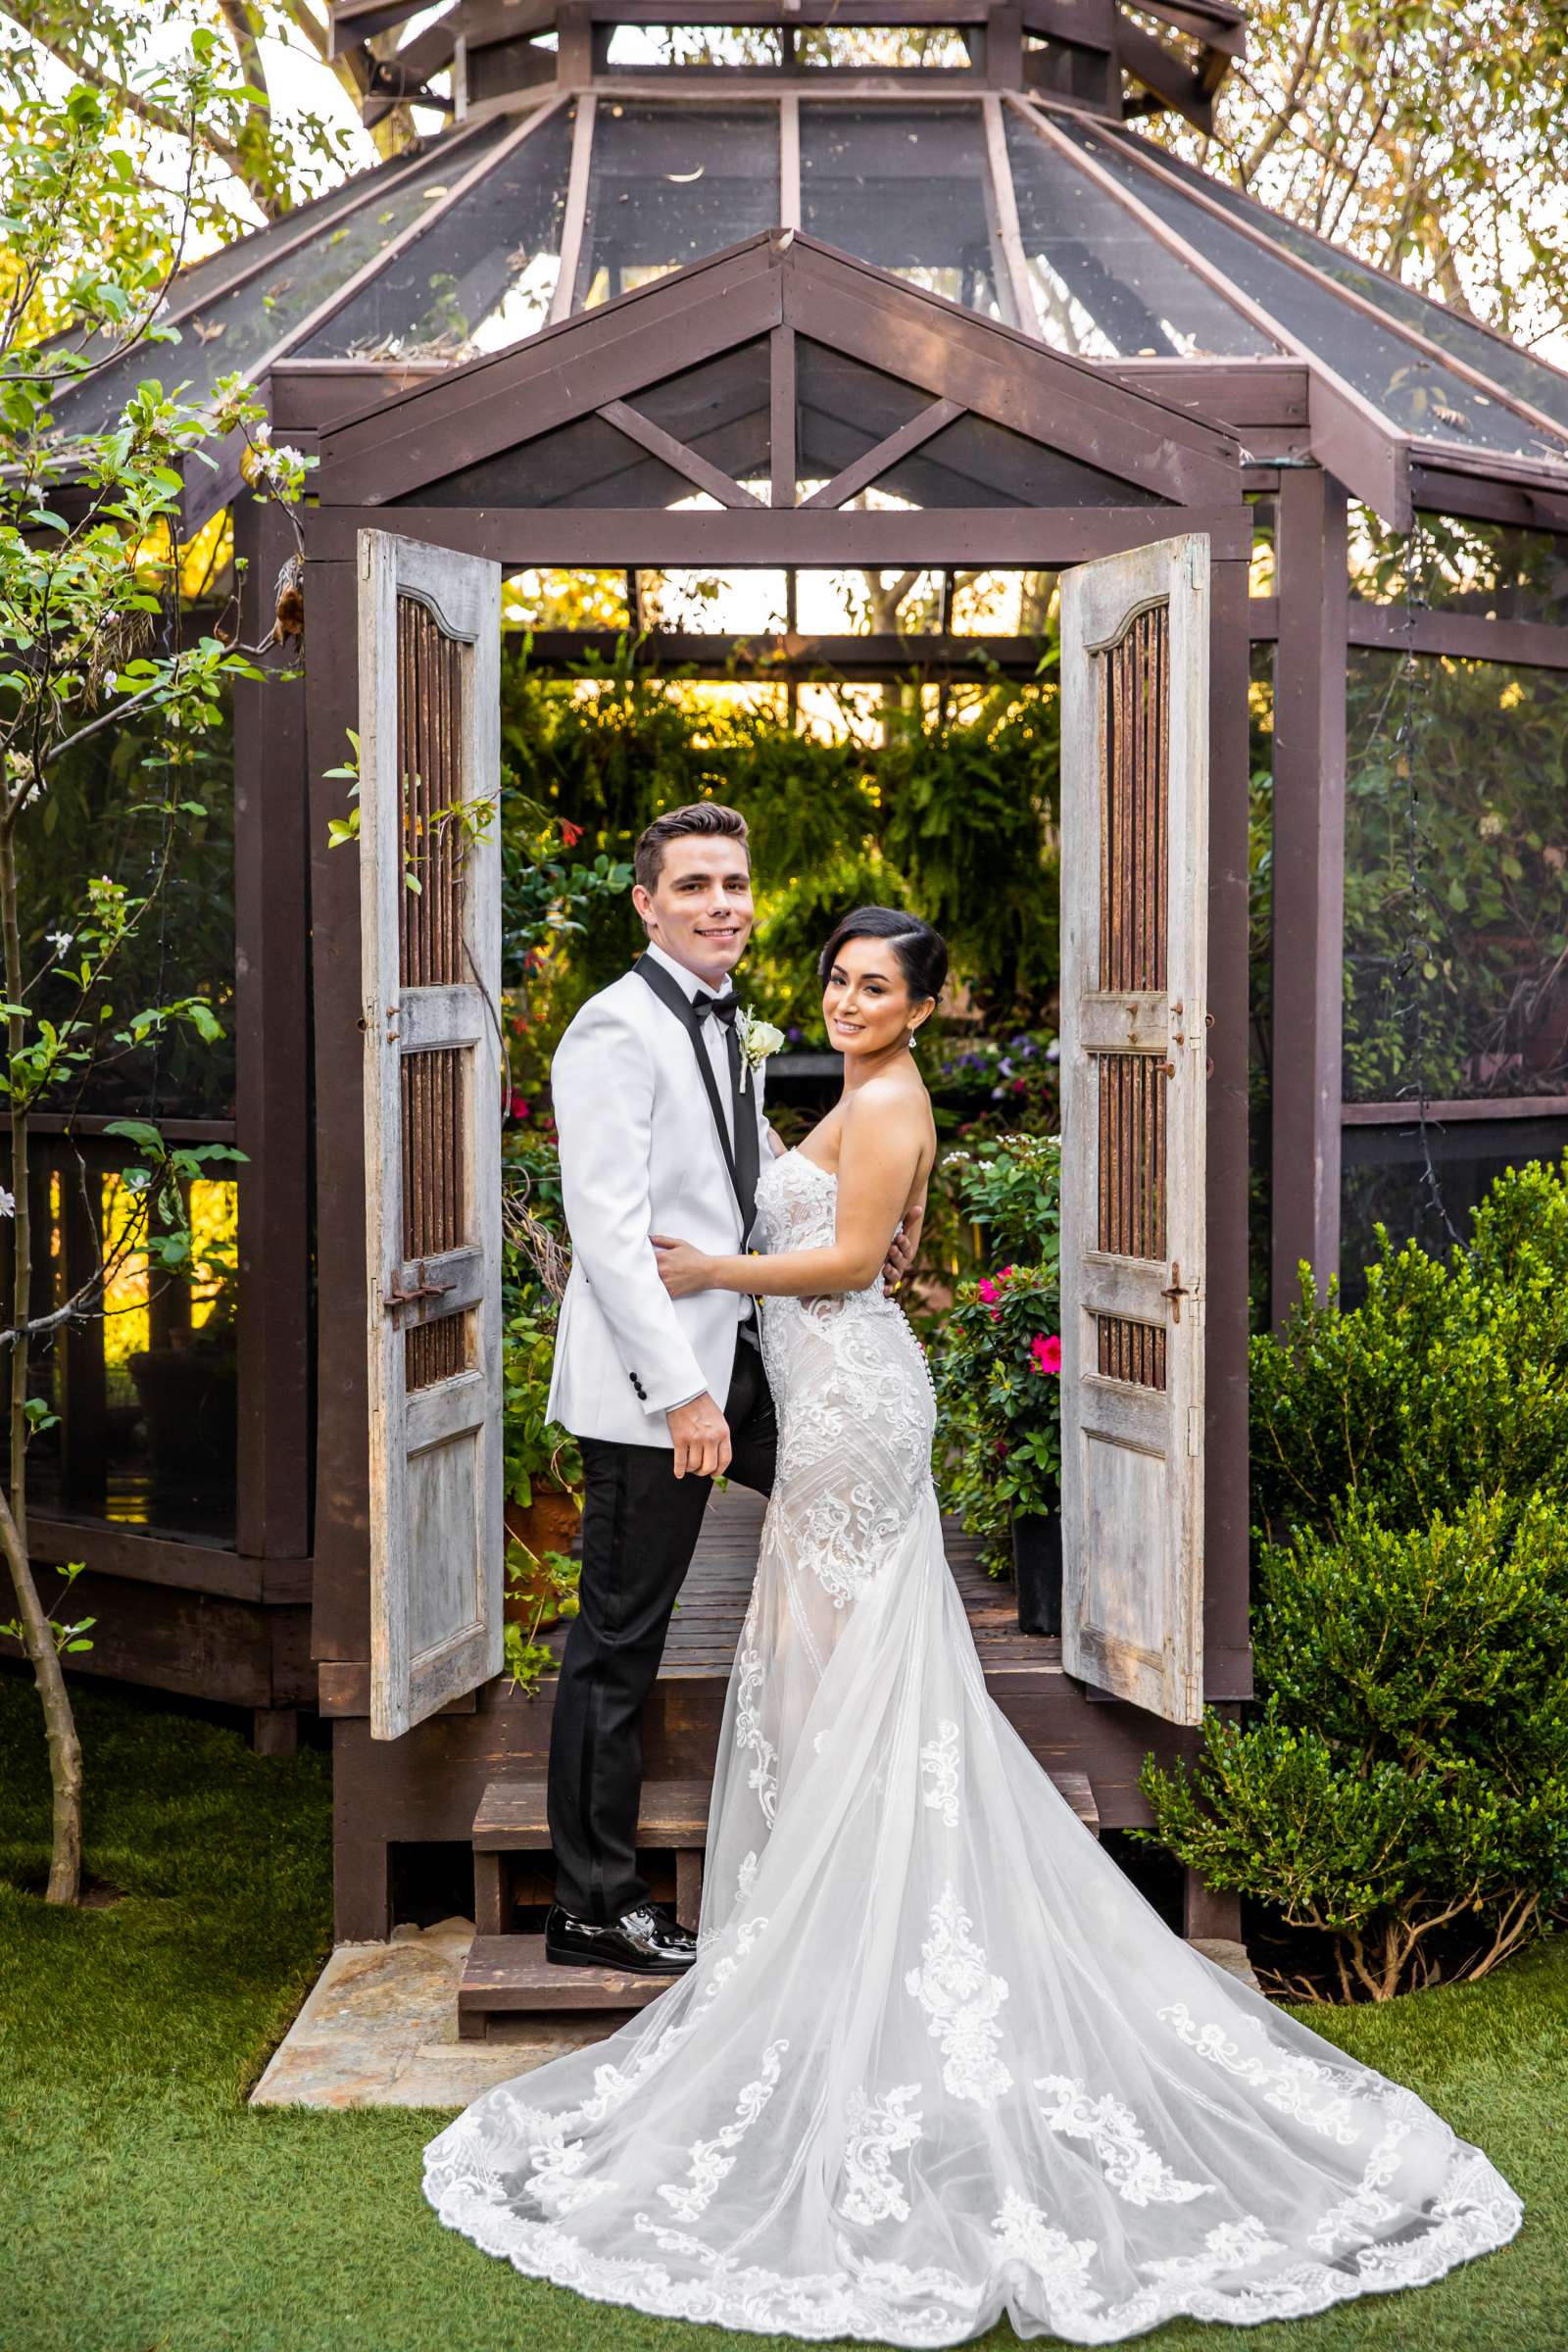 Twin Oaks House & Gardens Wedding Estate Wedding, Samantha and Raymond Wedding Photo #4 by True Photography